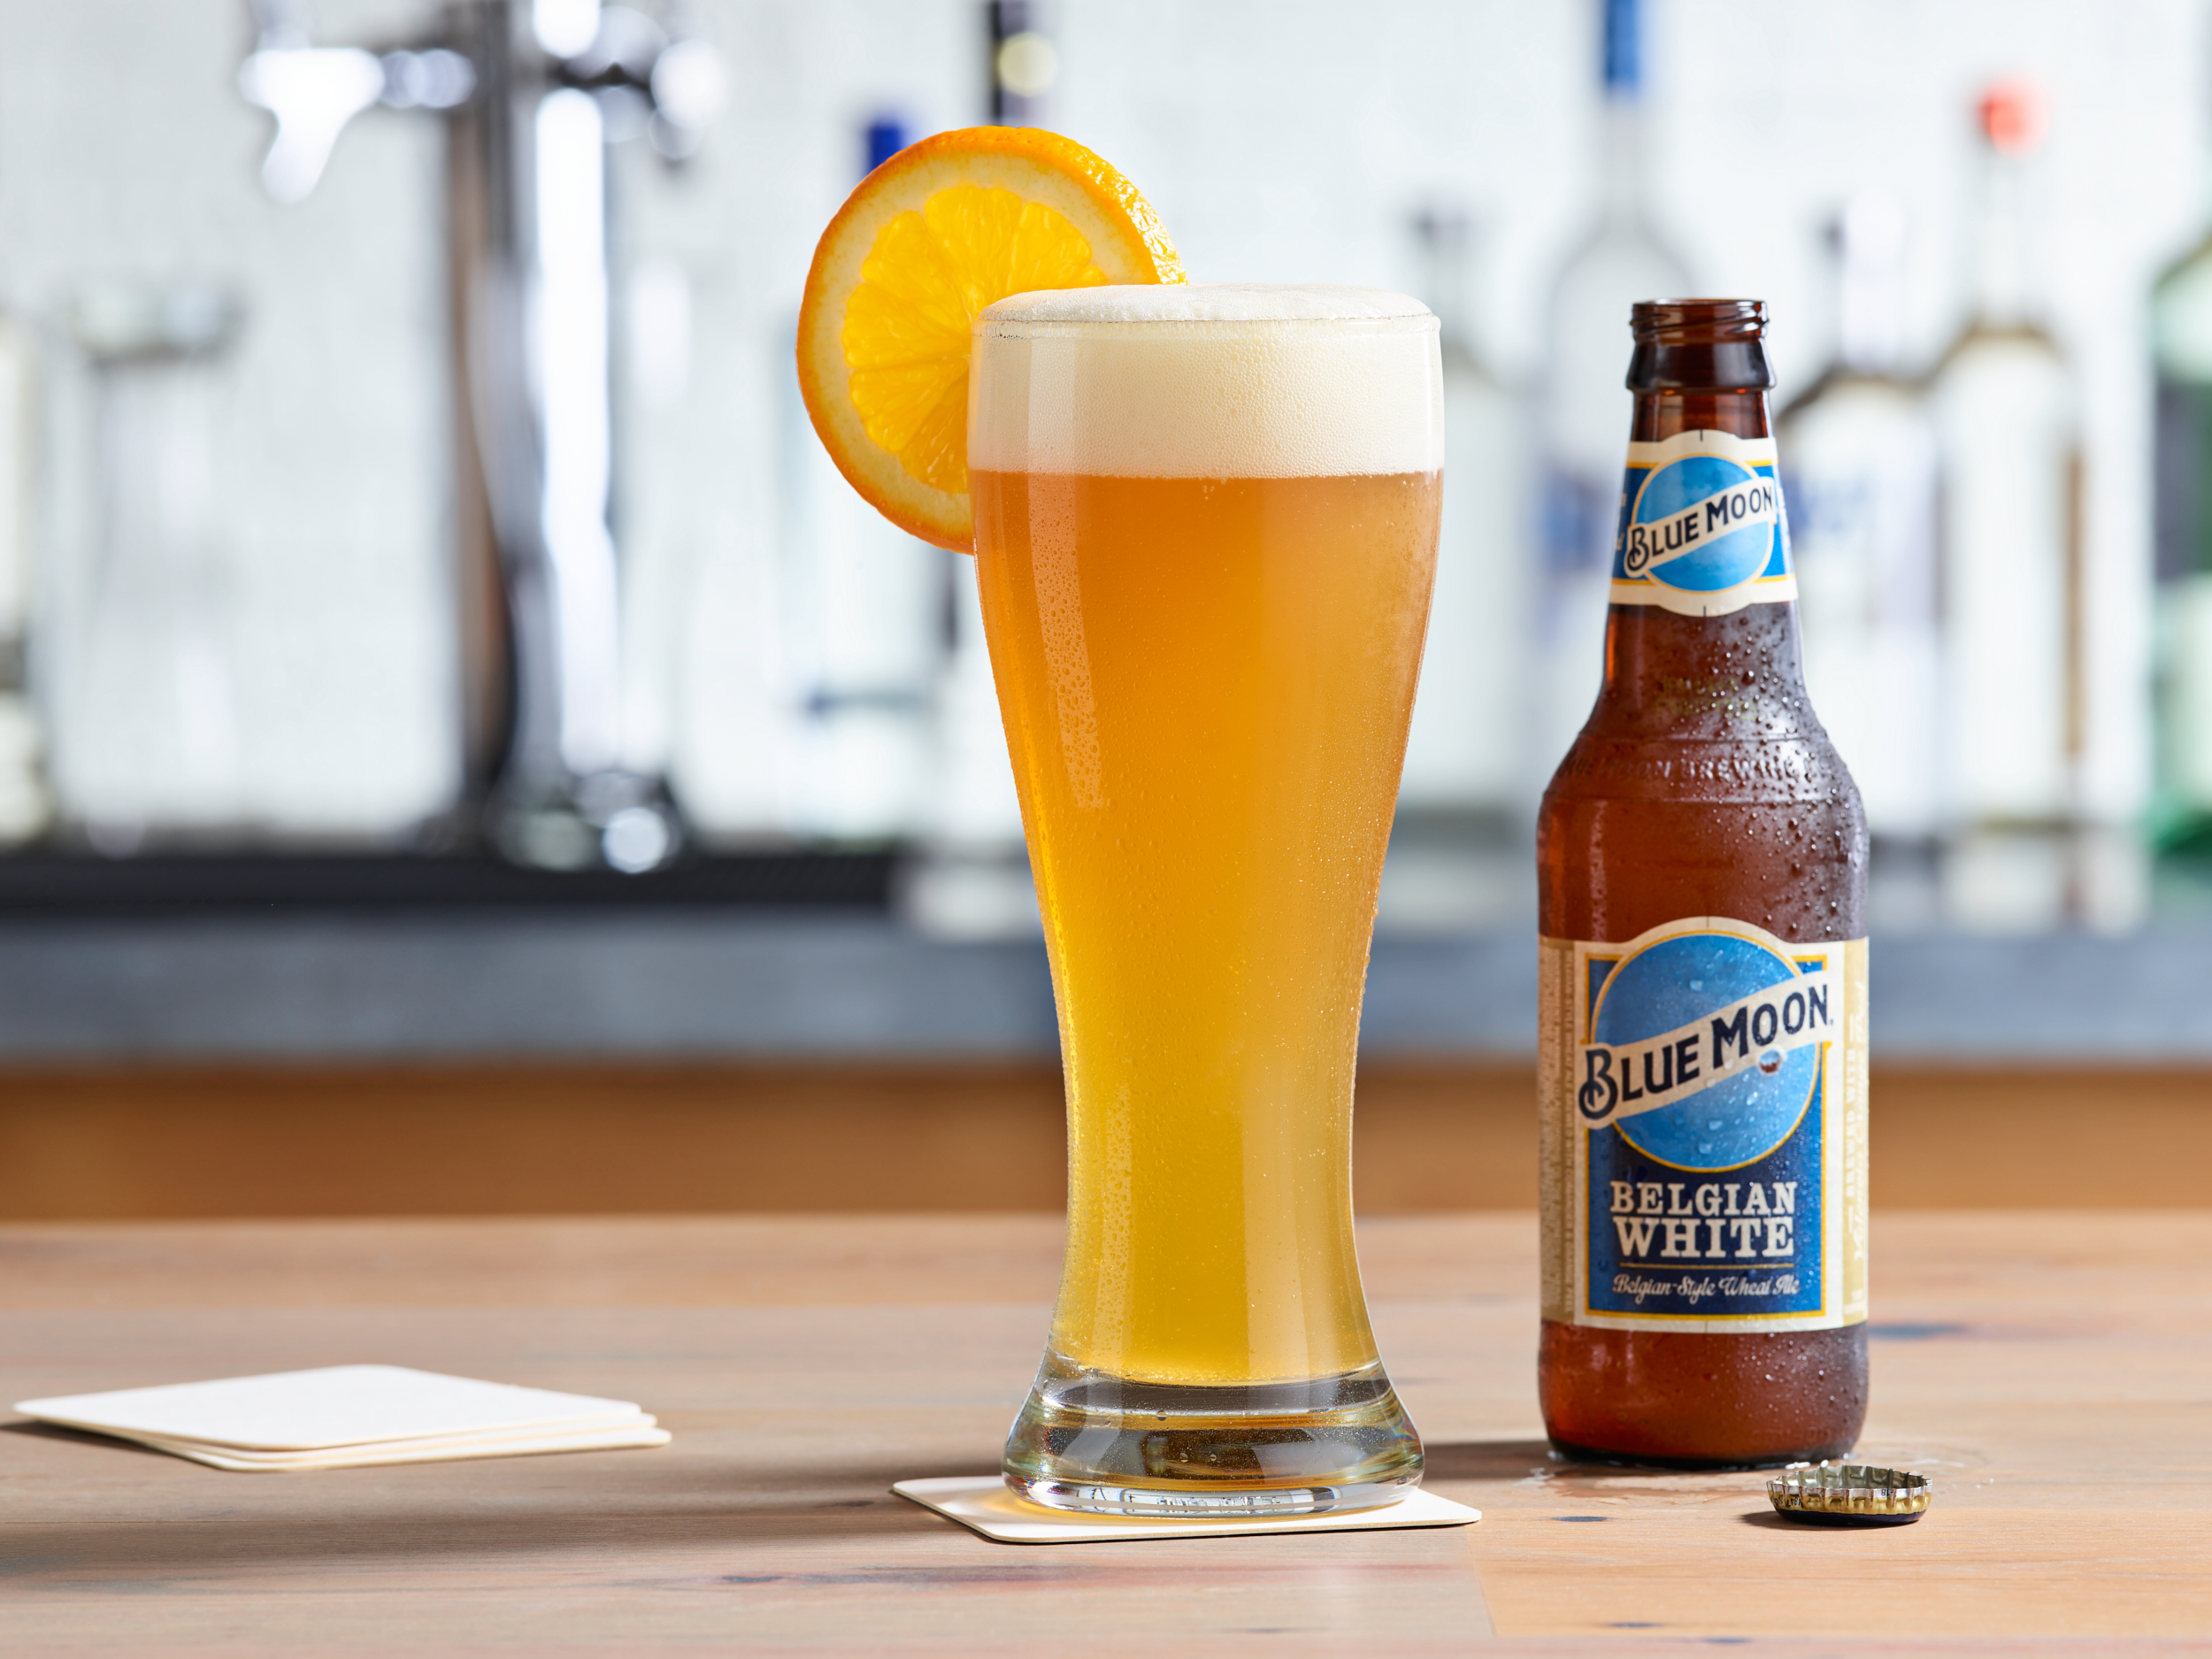 Blue moon beer in pint glass with orange wheel.